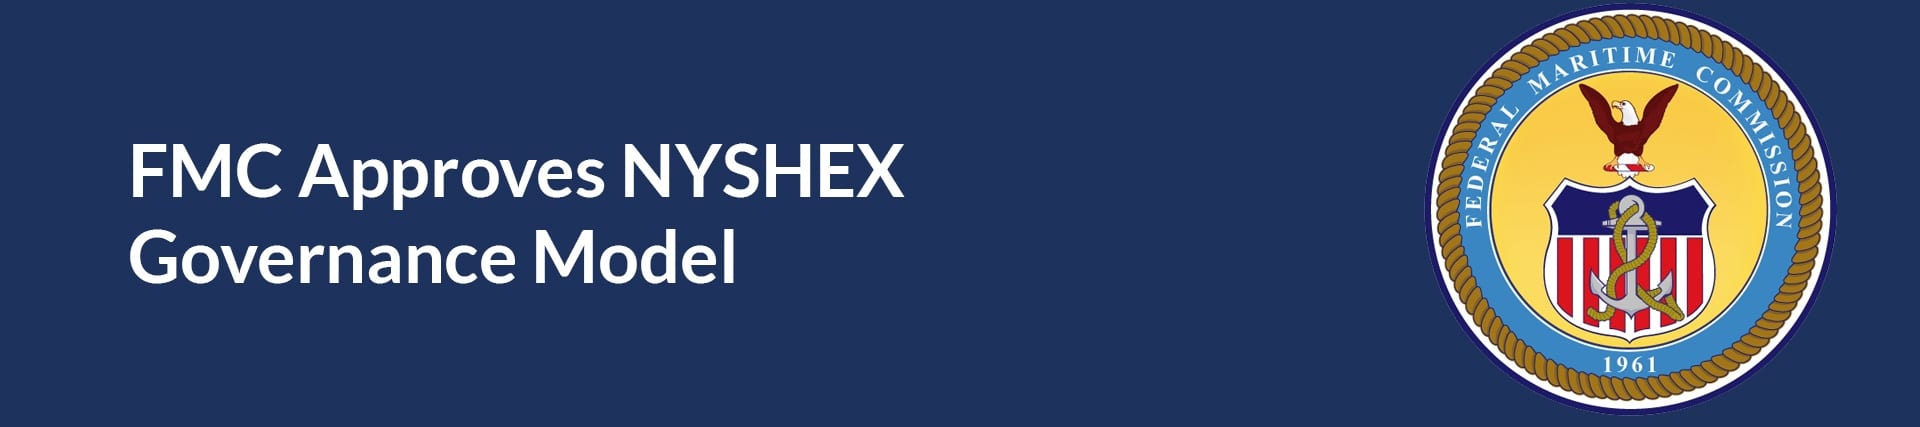 Collaboration & Compliance: FMC Confirms NYSHEX Governance